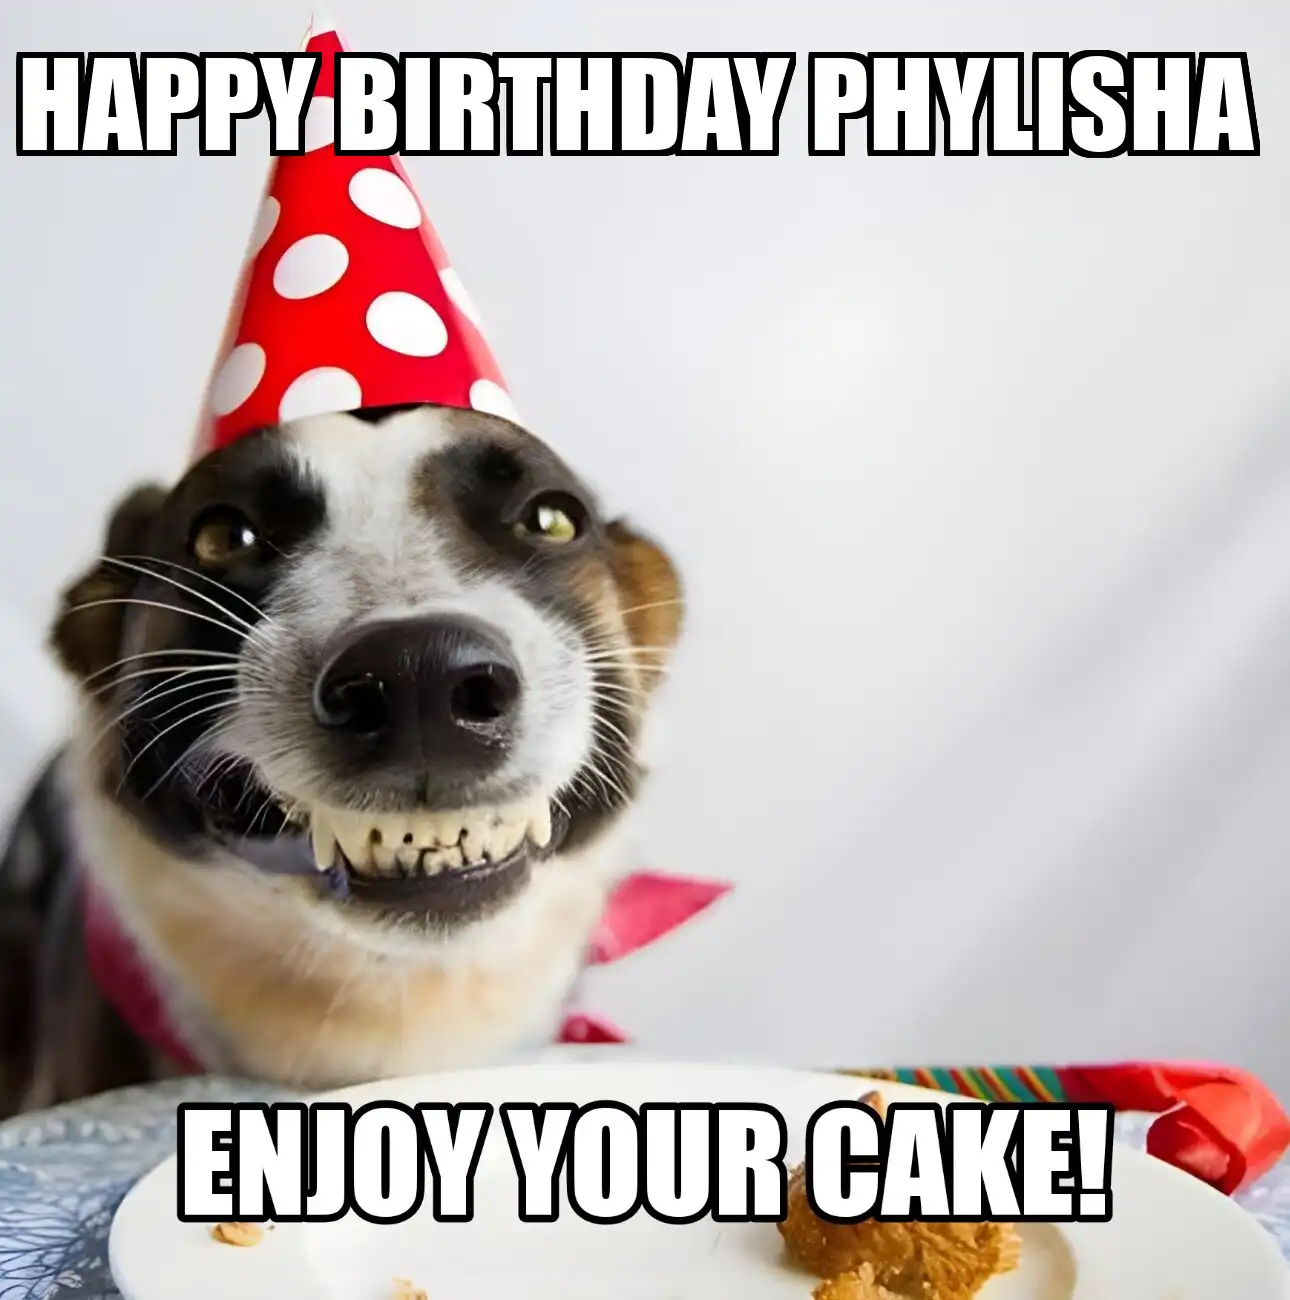 Happy Birthday Phylisha Enjoy Your Cake Dog Meme